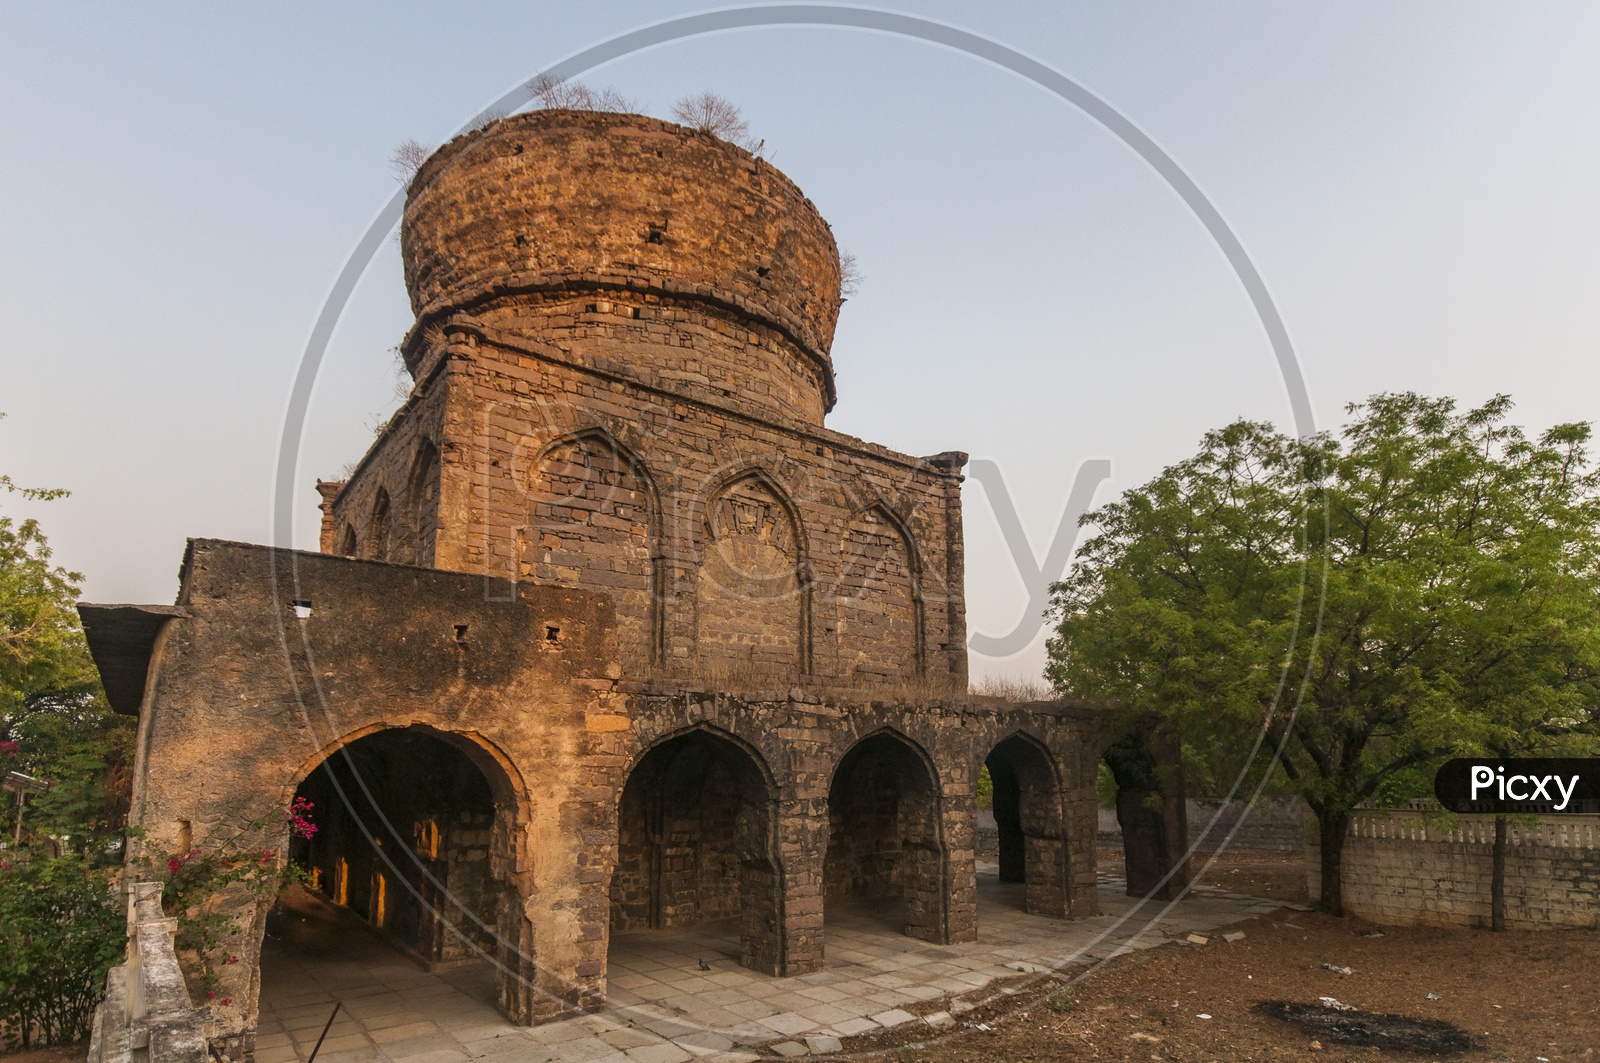 Qutub Shahi Tombs